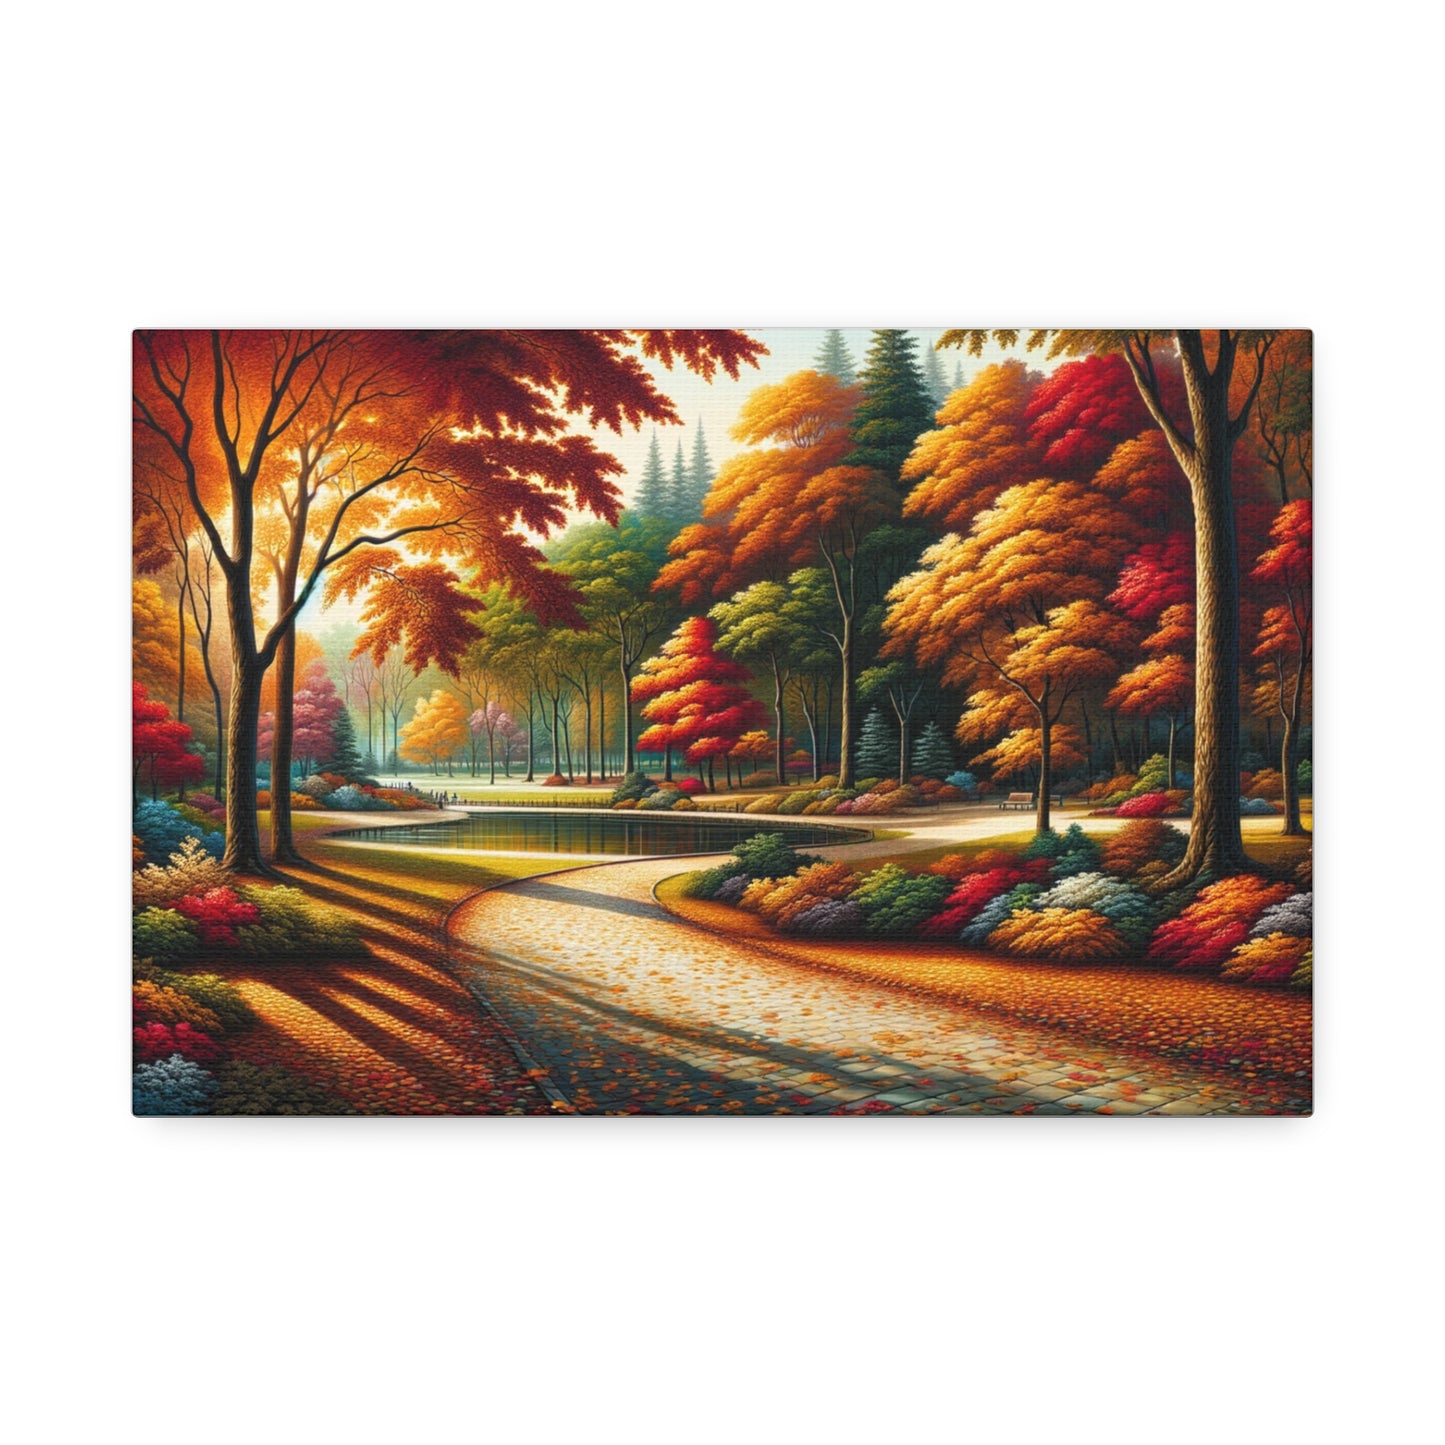 Autumn Serenity: Scenic Park Landscape Canvas Art